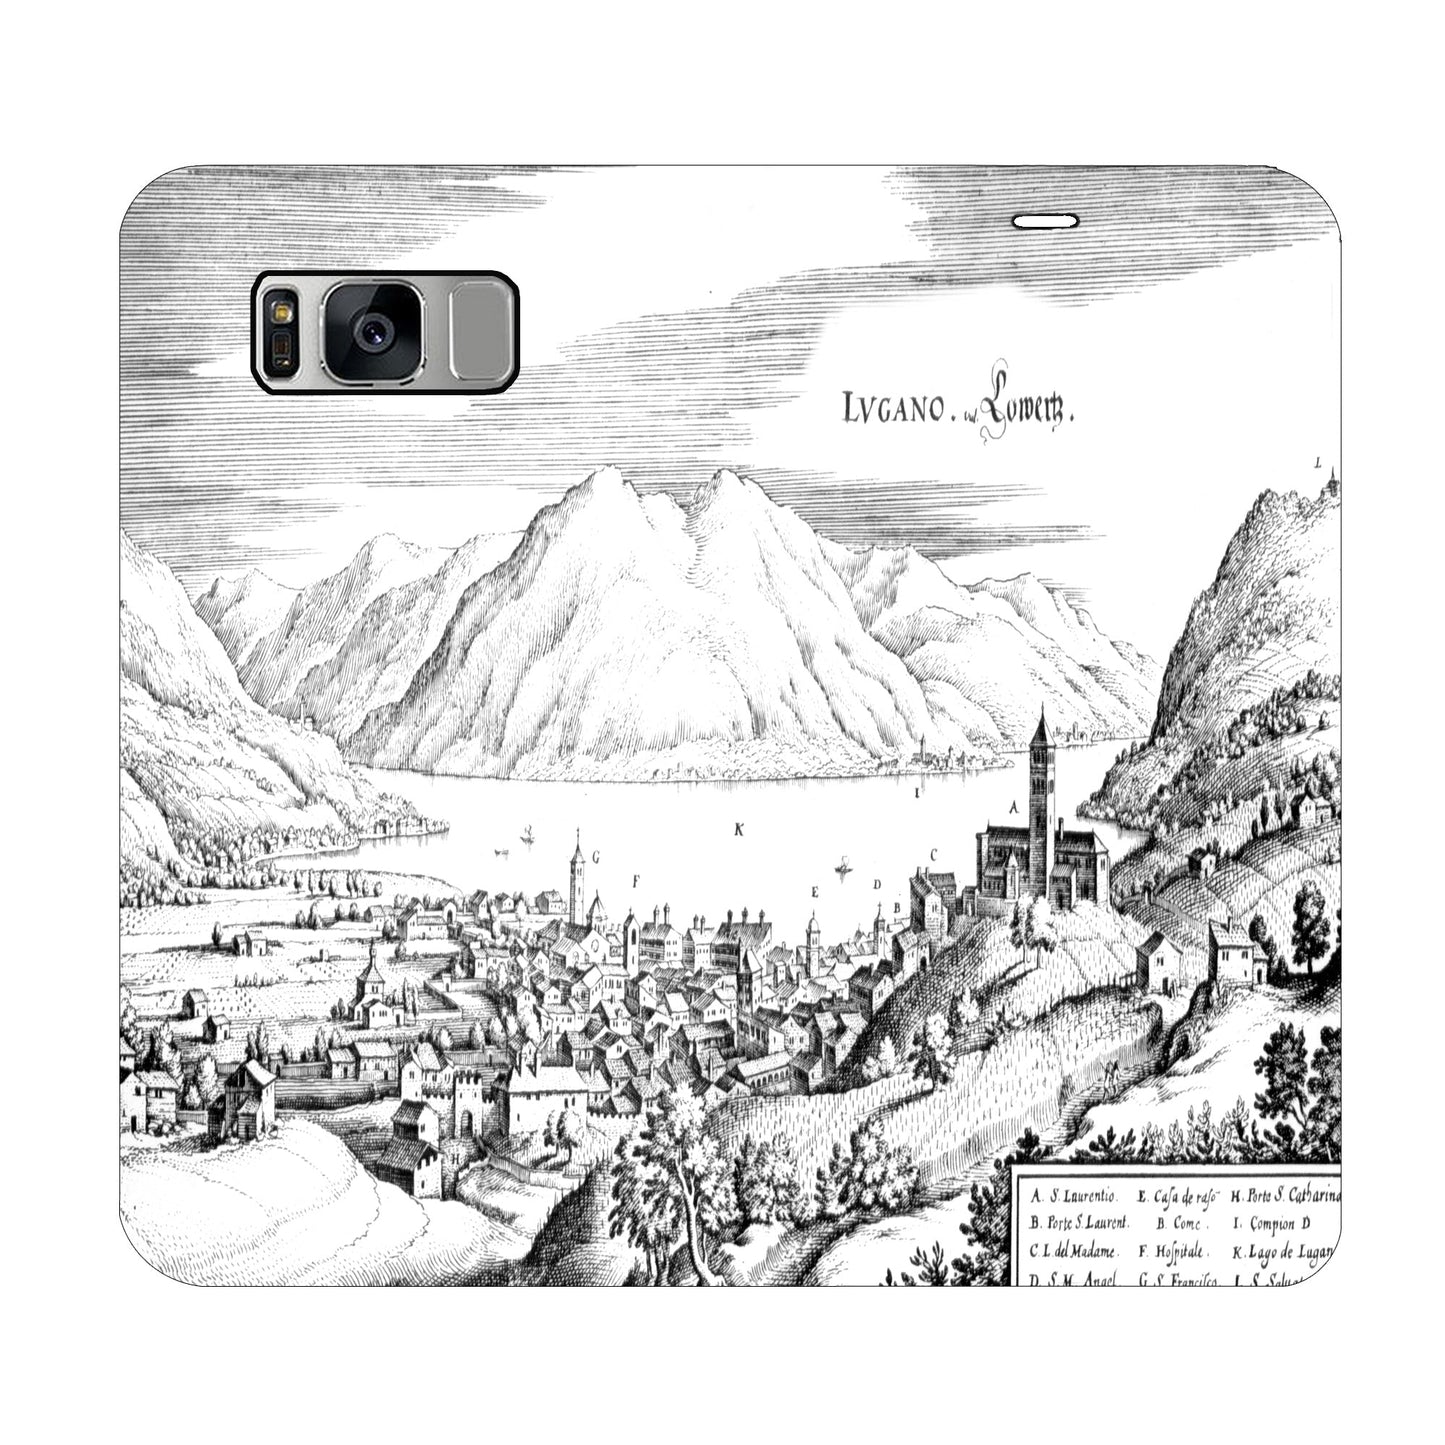 Lugano Merian Panorama Case for Samsung Galaxy S8